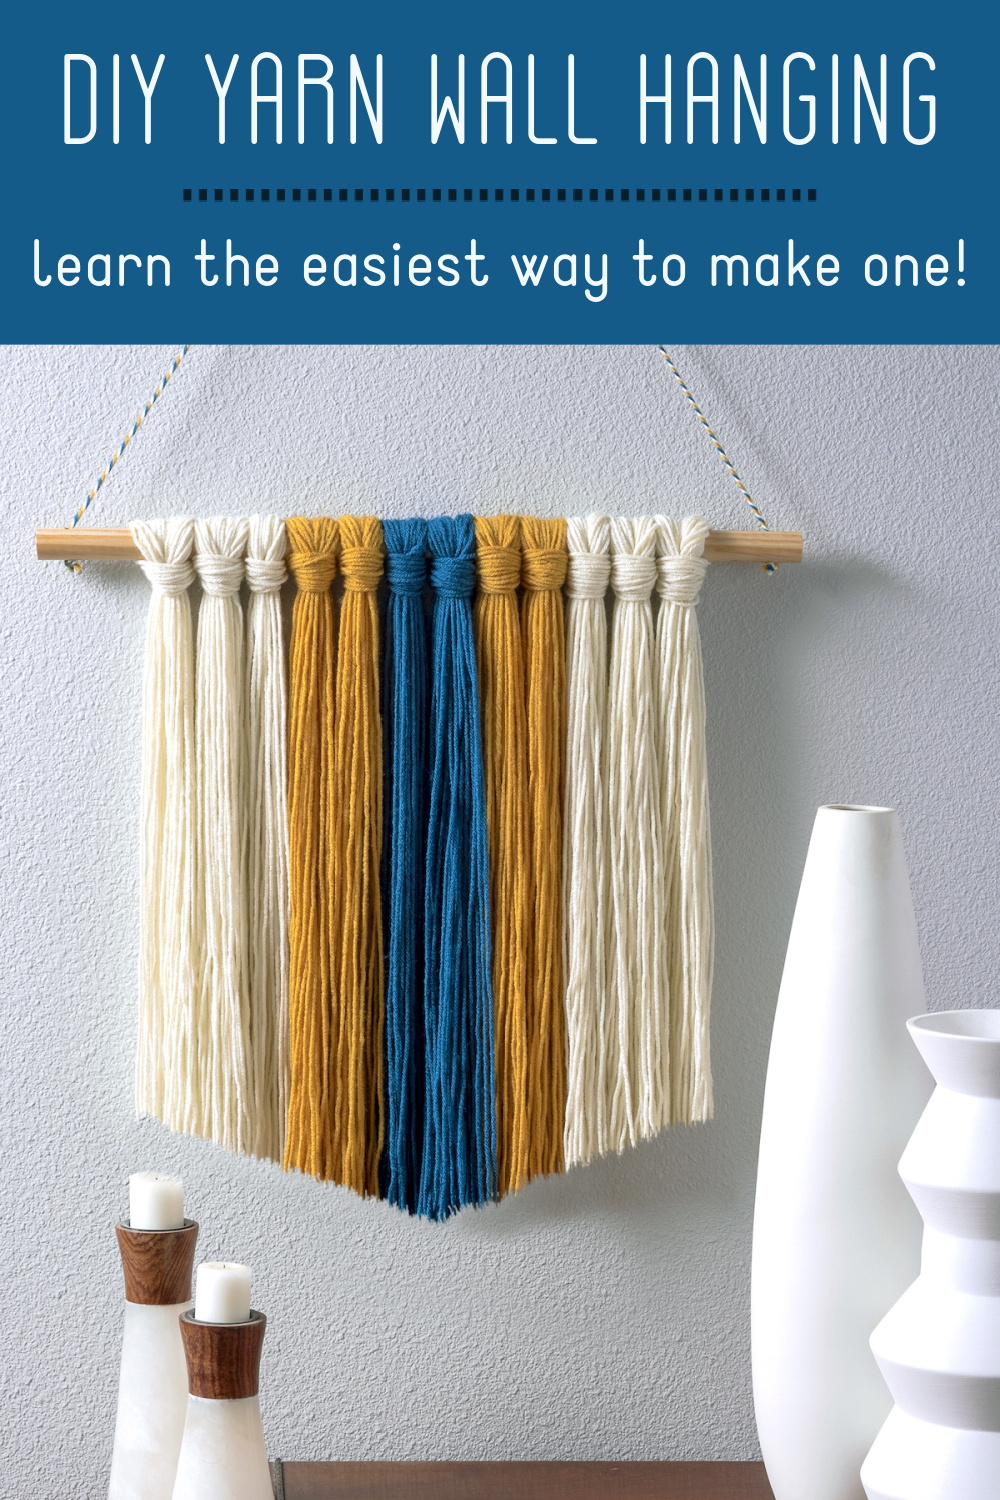 Make a yarn wall hanging